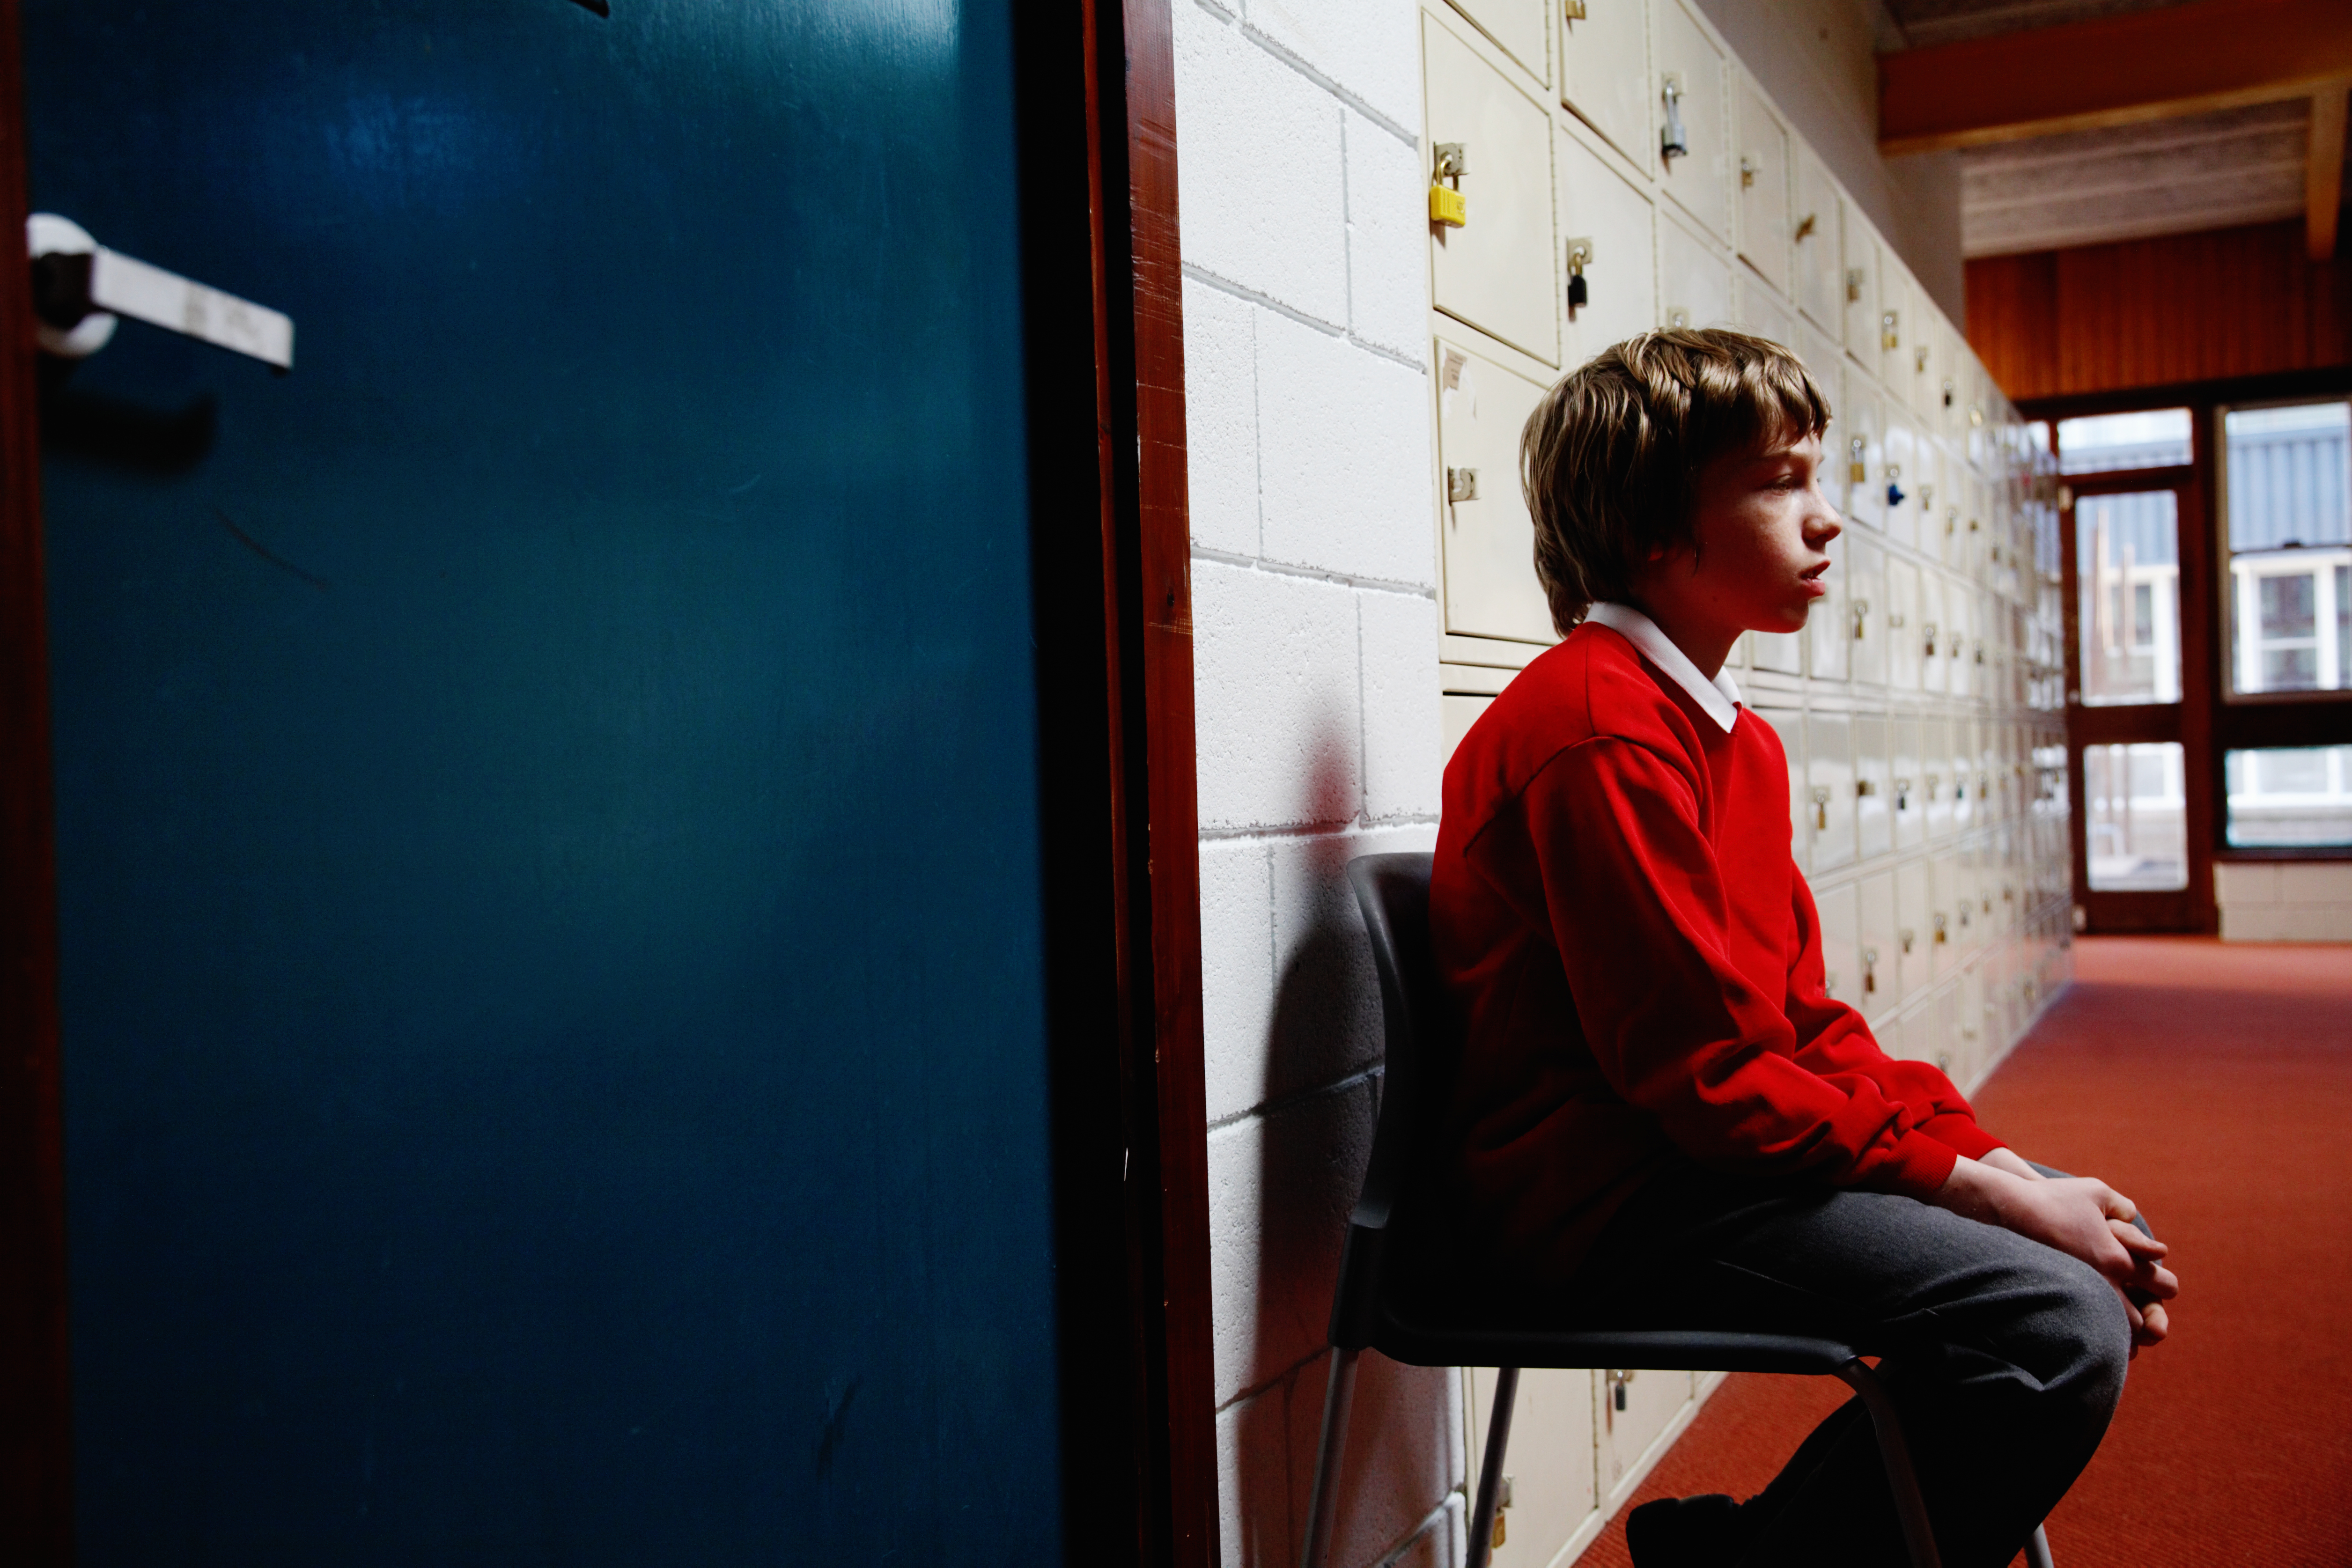 Schoolboy (11-13) sitting on chair in corridor, side view